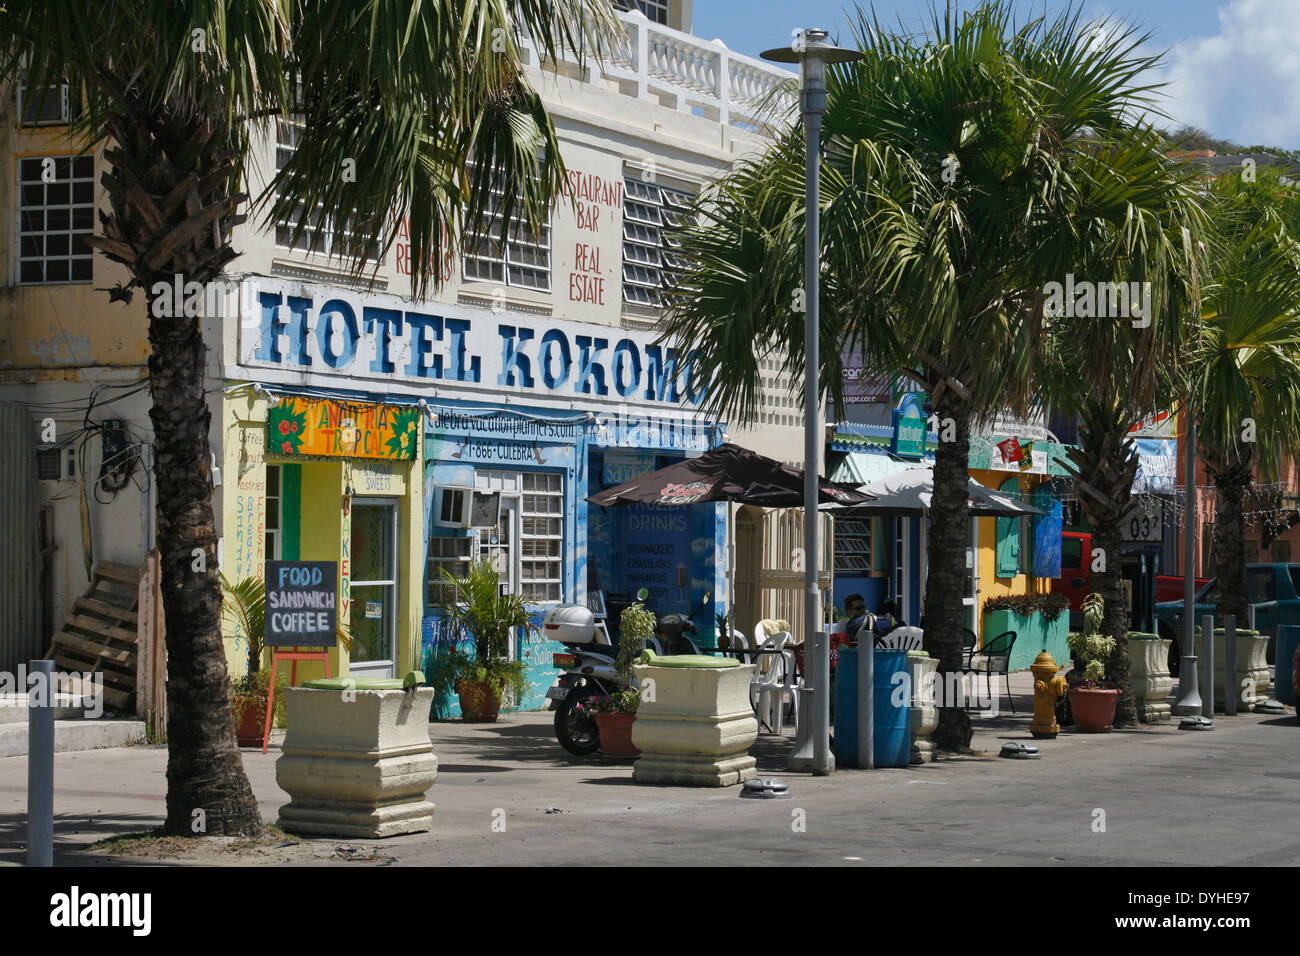 Isla Culebra Puerto Rico USA territory Hotel Kokomo street scene Stock Photo